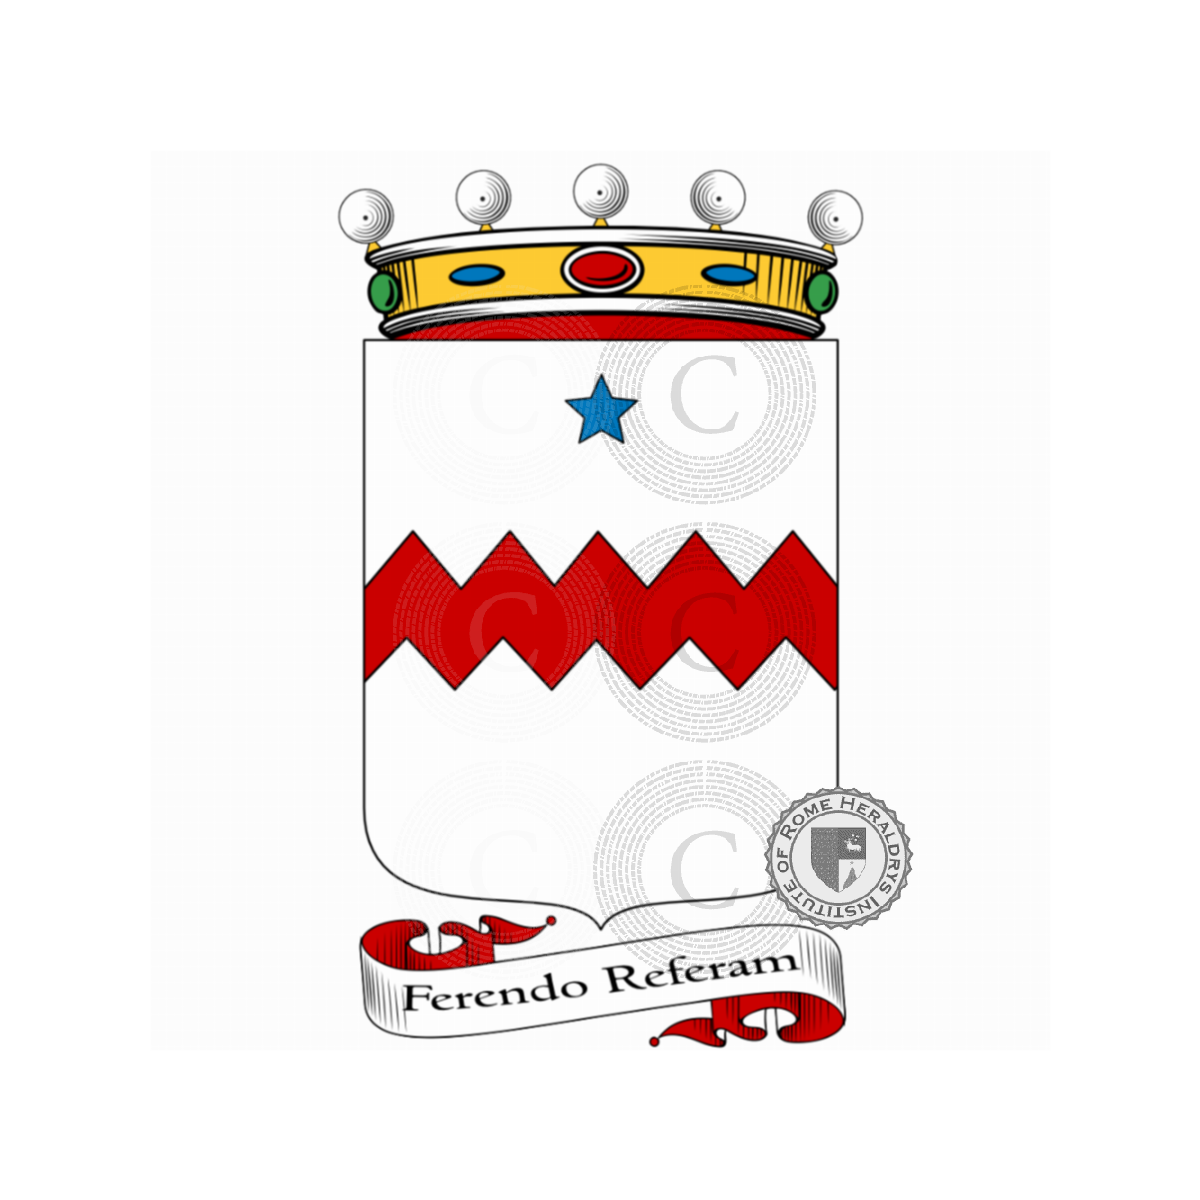 Wappen der FamilieBarberi, Barberis